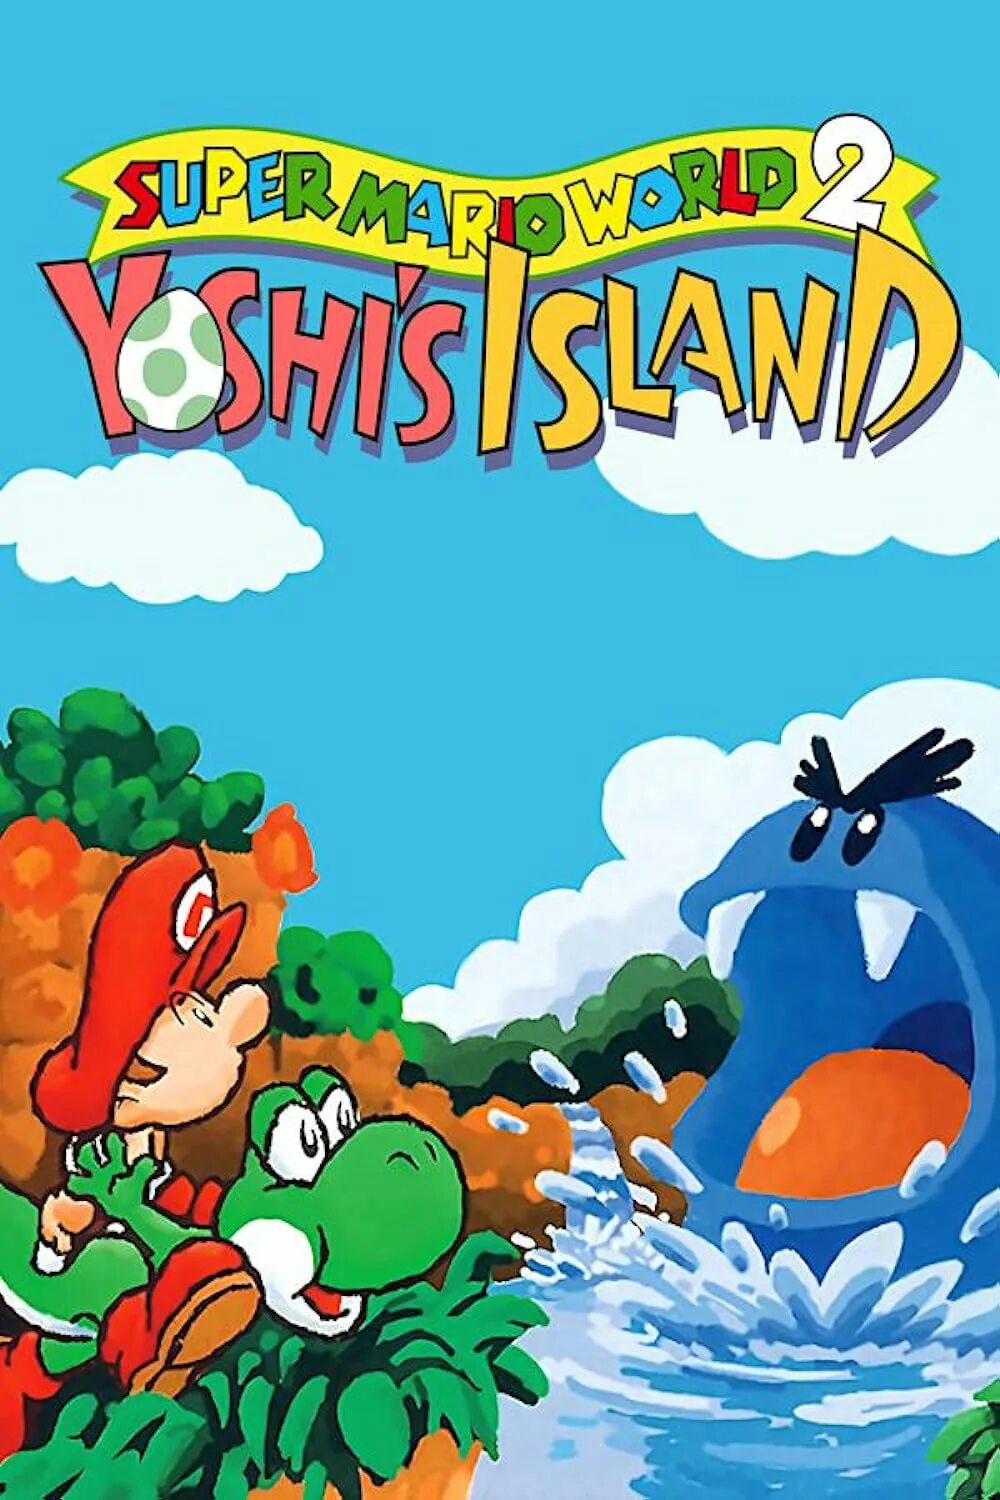 Super mario world yoshi's island. Super Mario World 2 Yoshis Island. Yoshi Island. Yoshi s Island. Супер Марио Камек.